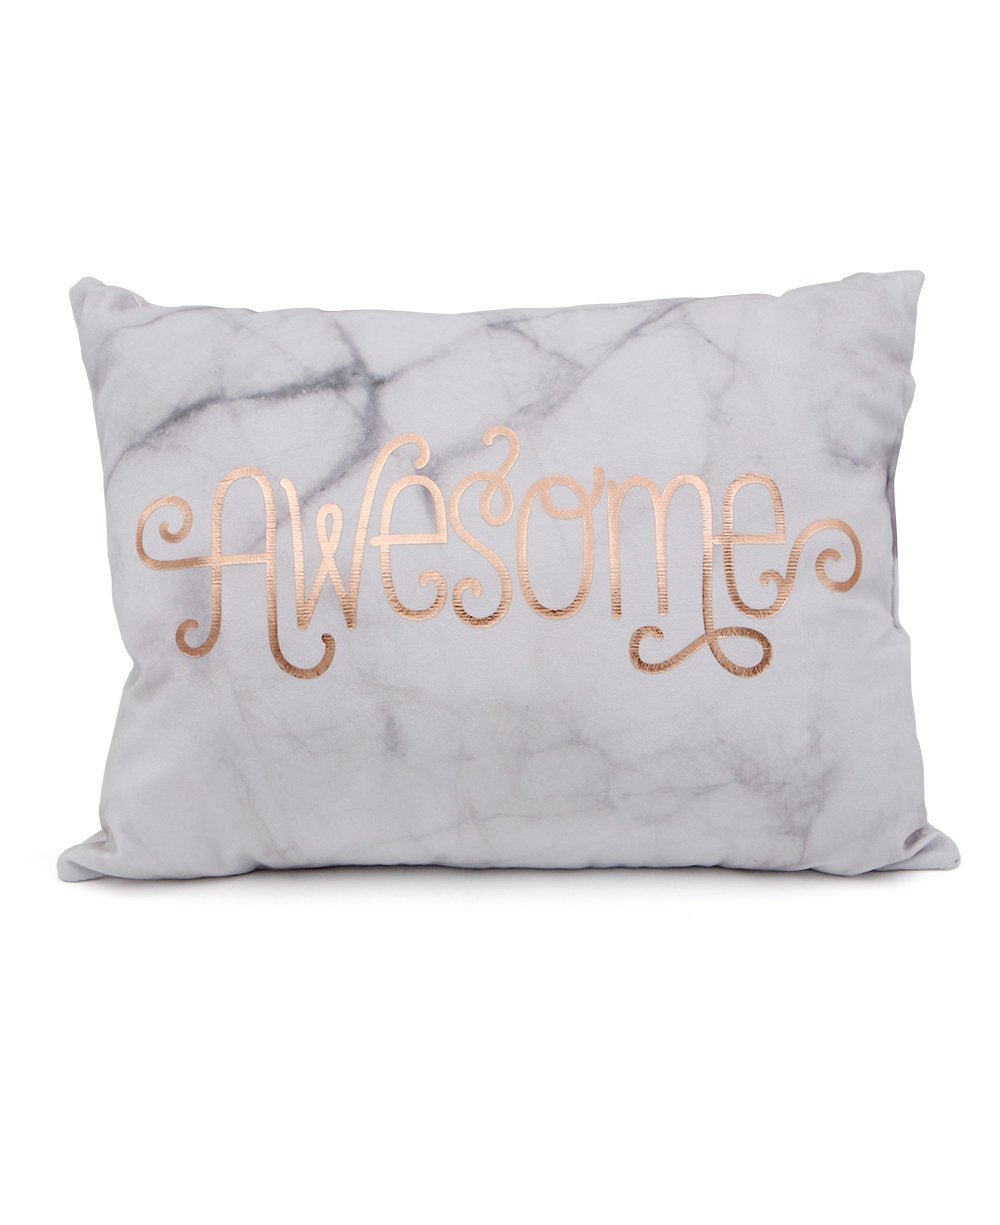 Marble Print Throw Pillow, Awesome - Pillows